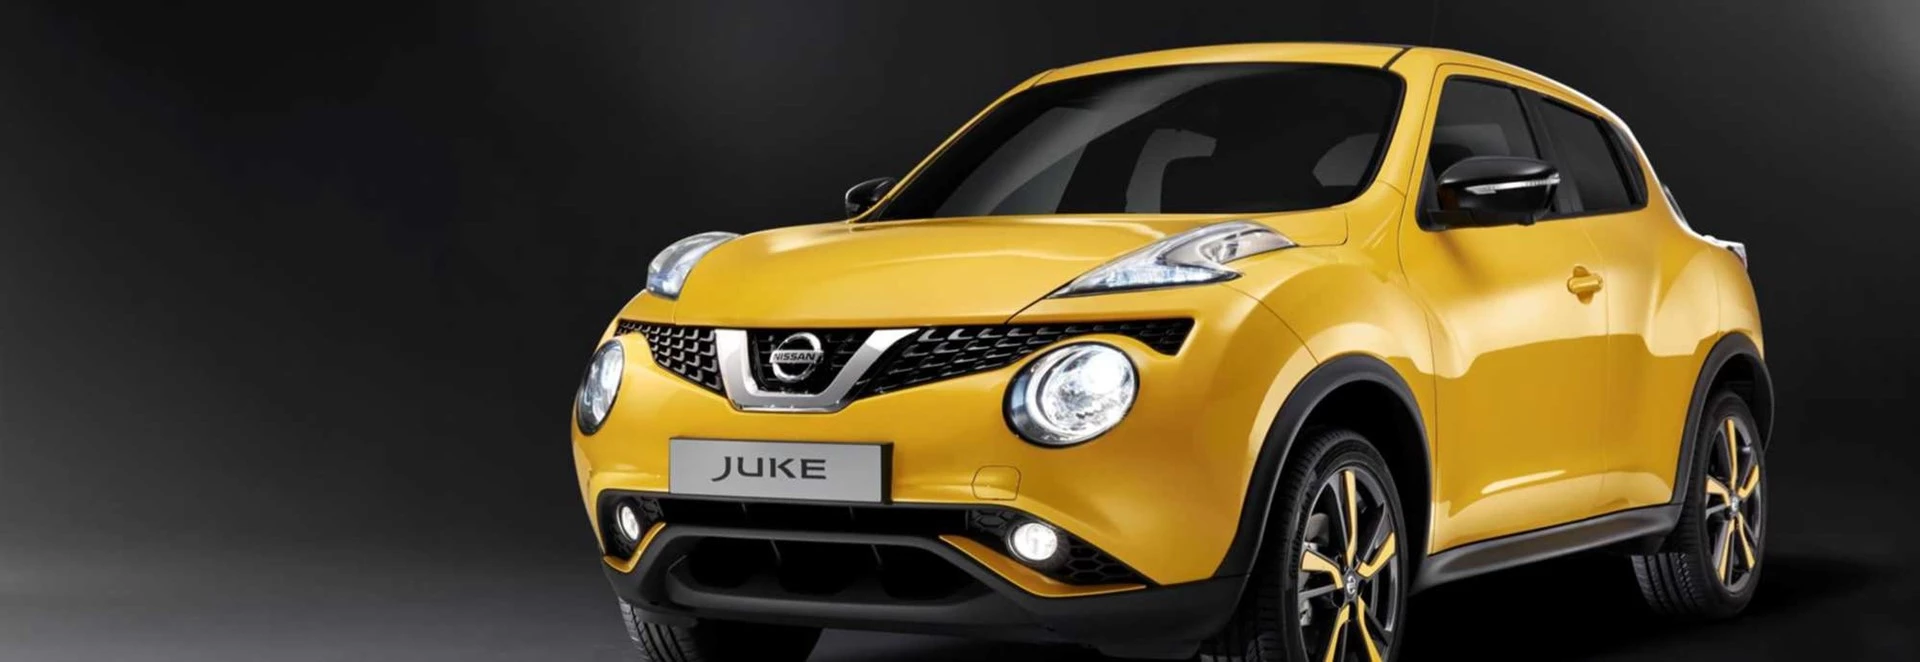 Nissan Juke 1.2 DIG-T Tekna Crossover Review - Car Keys